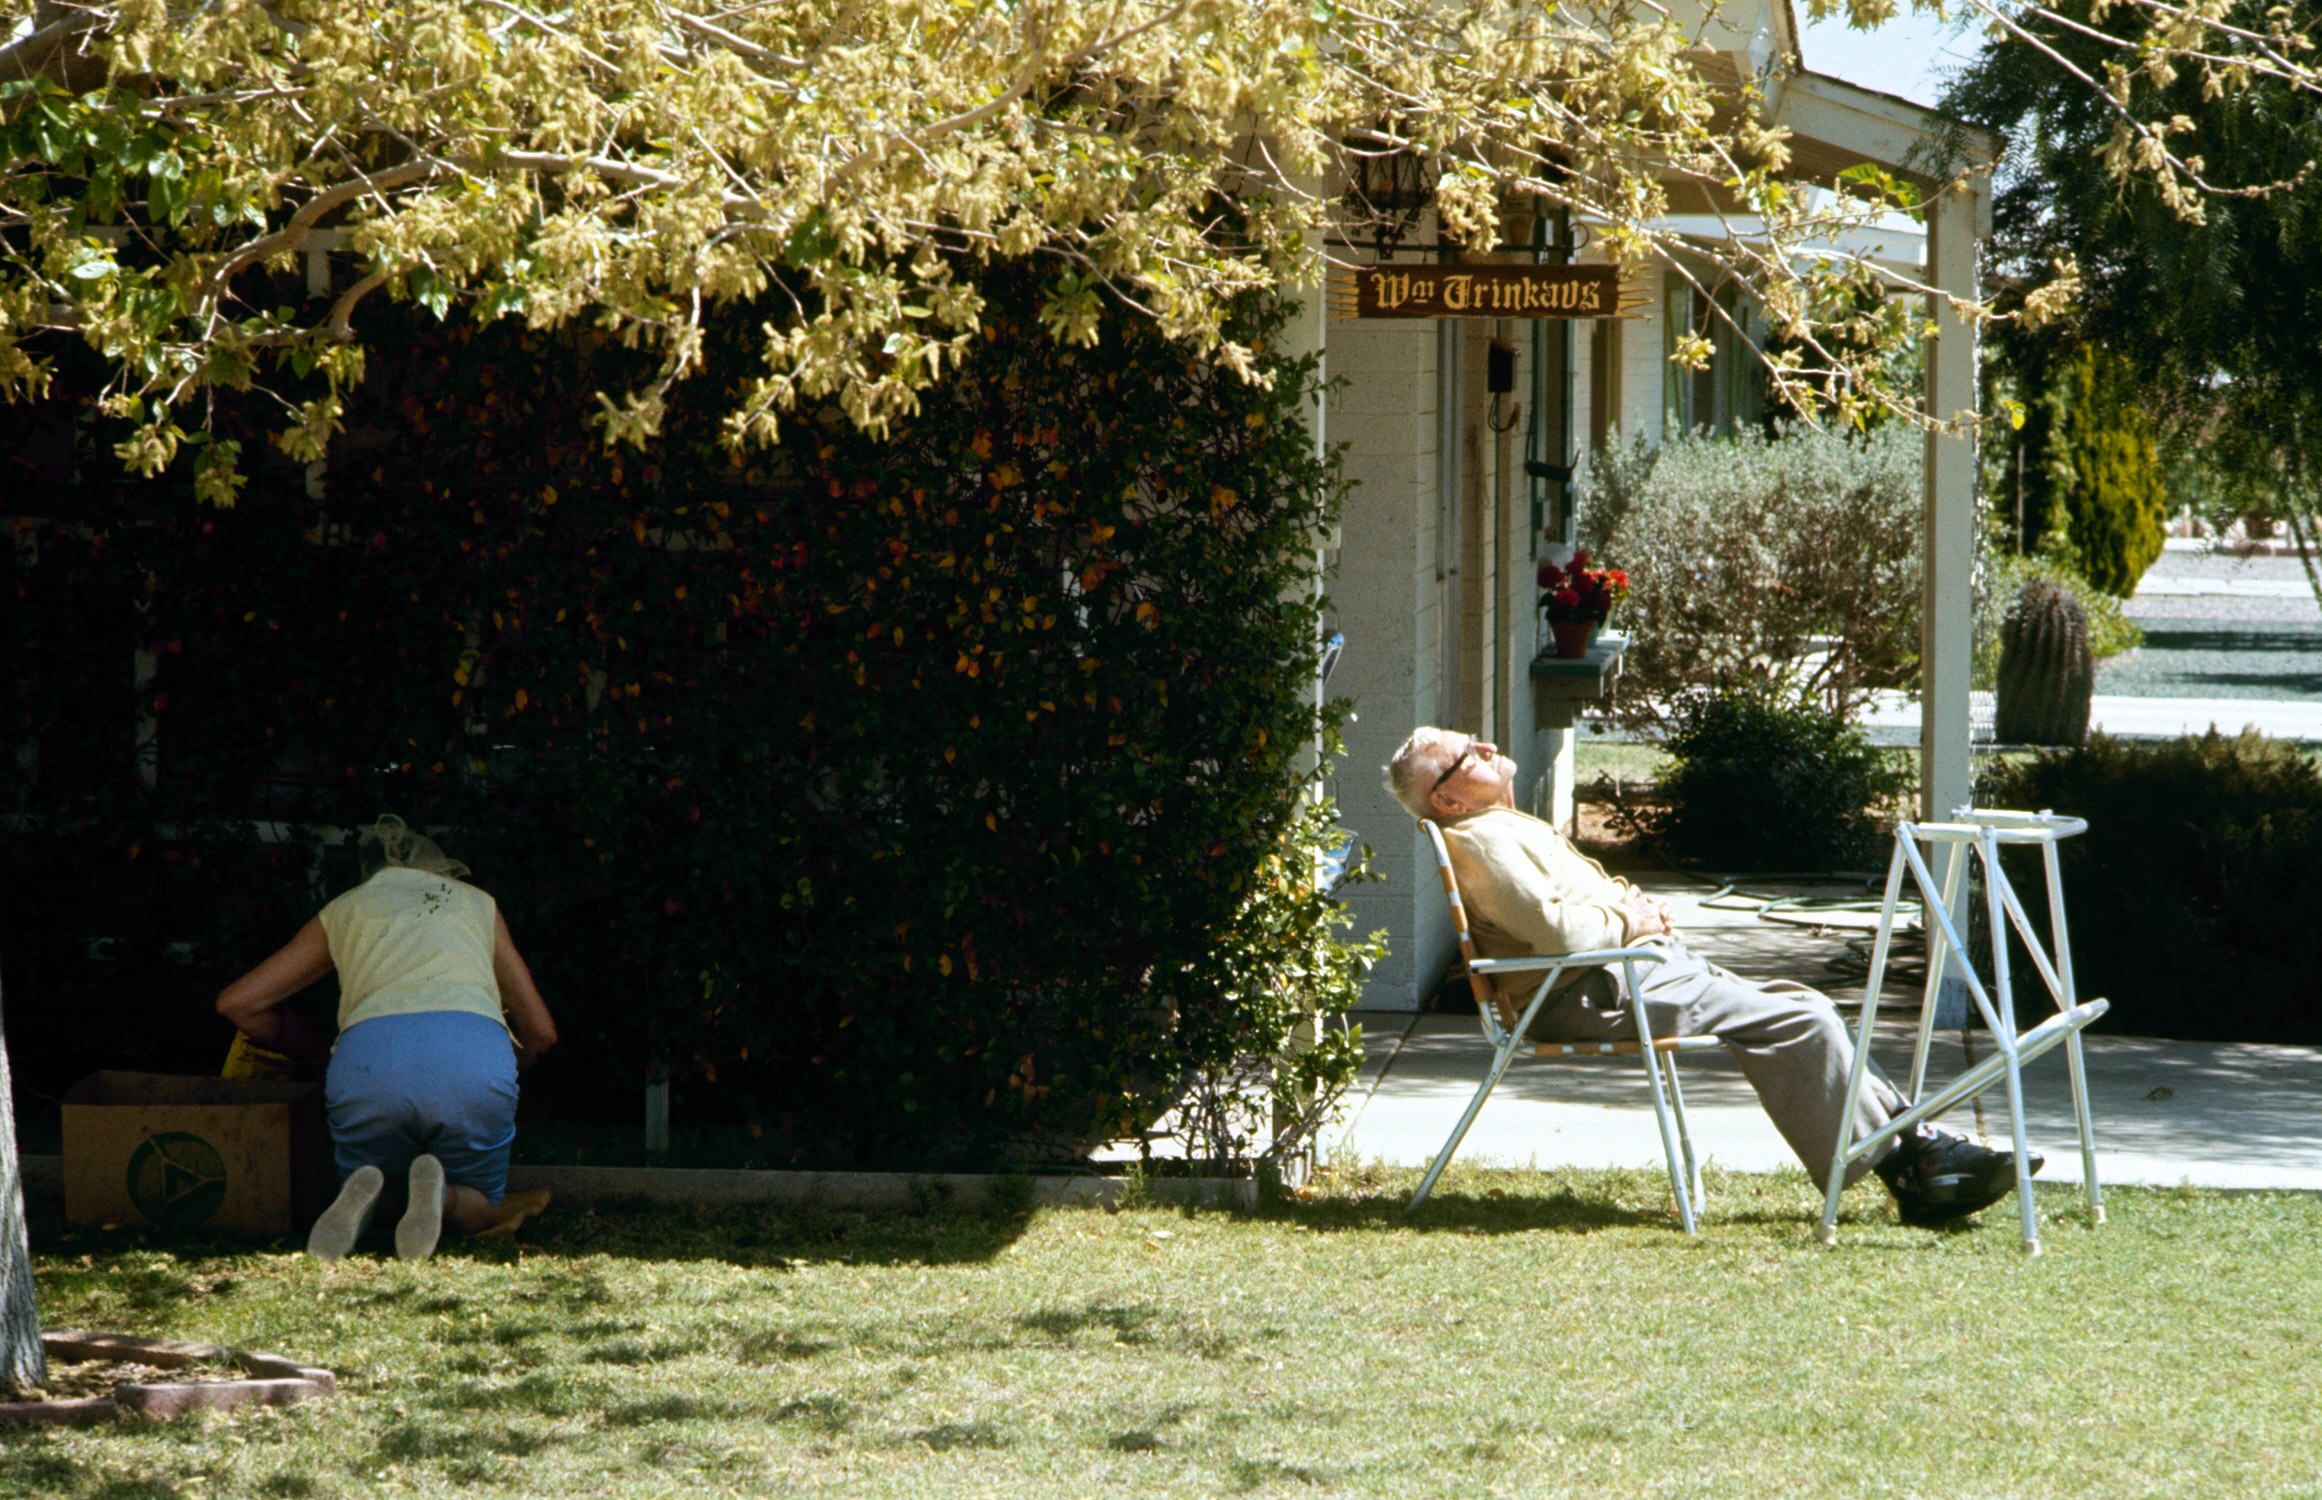 Sun City, retirement village in Arizona, 1970.